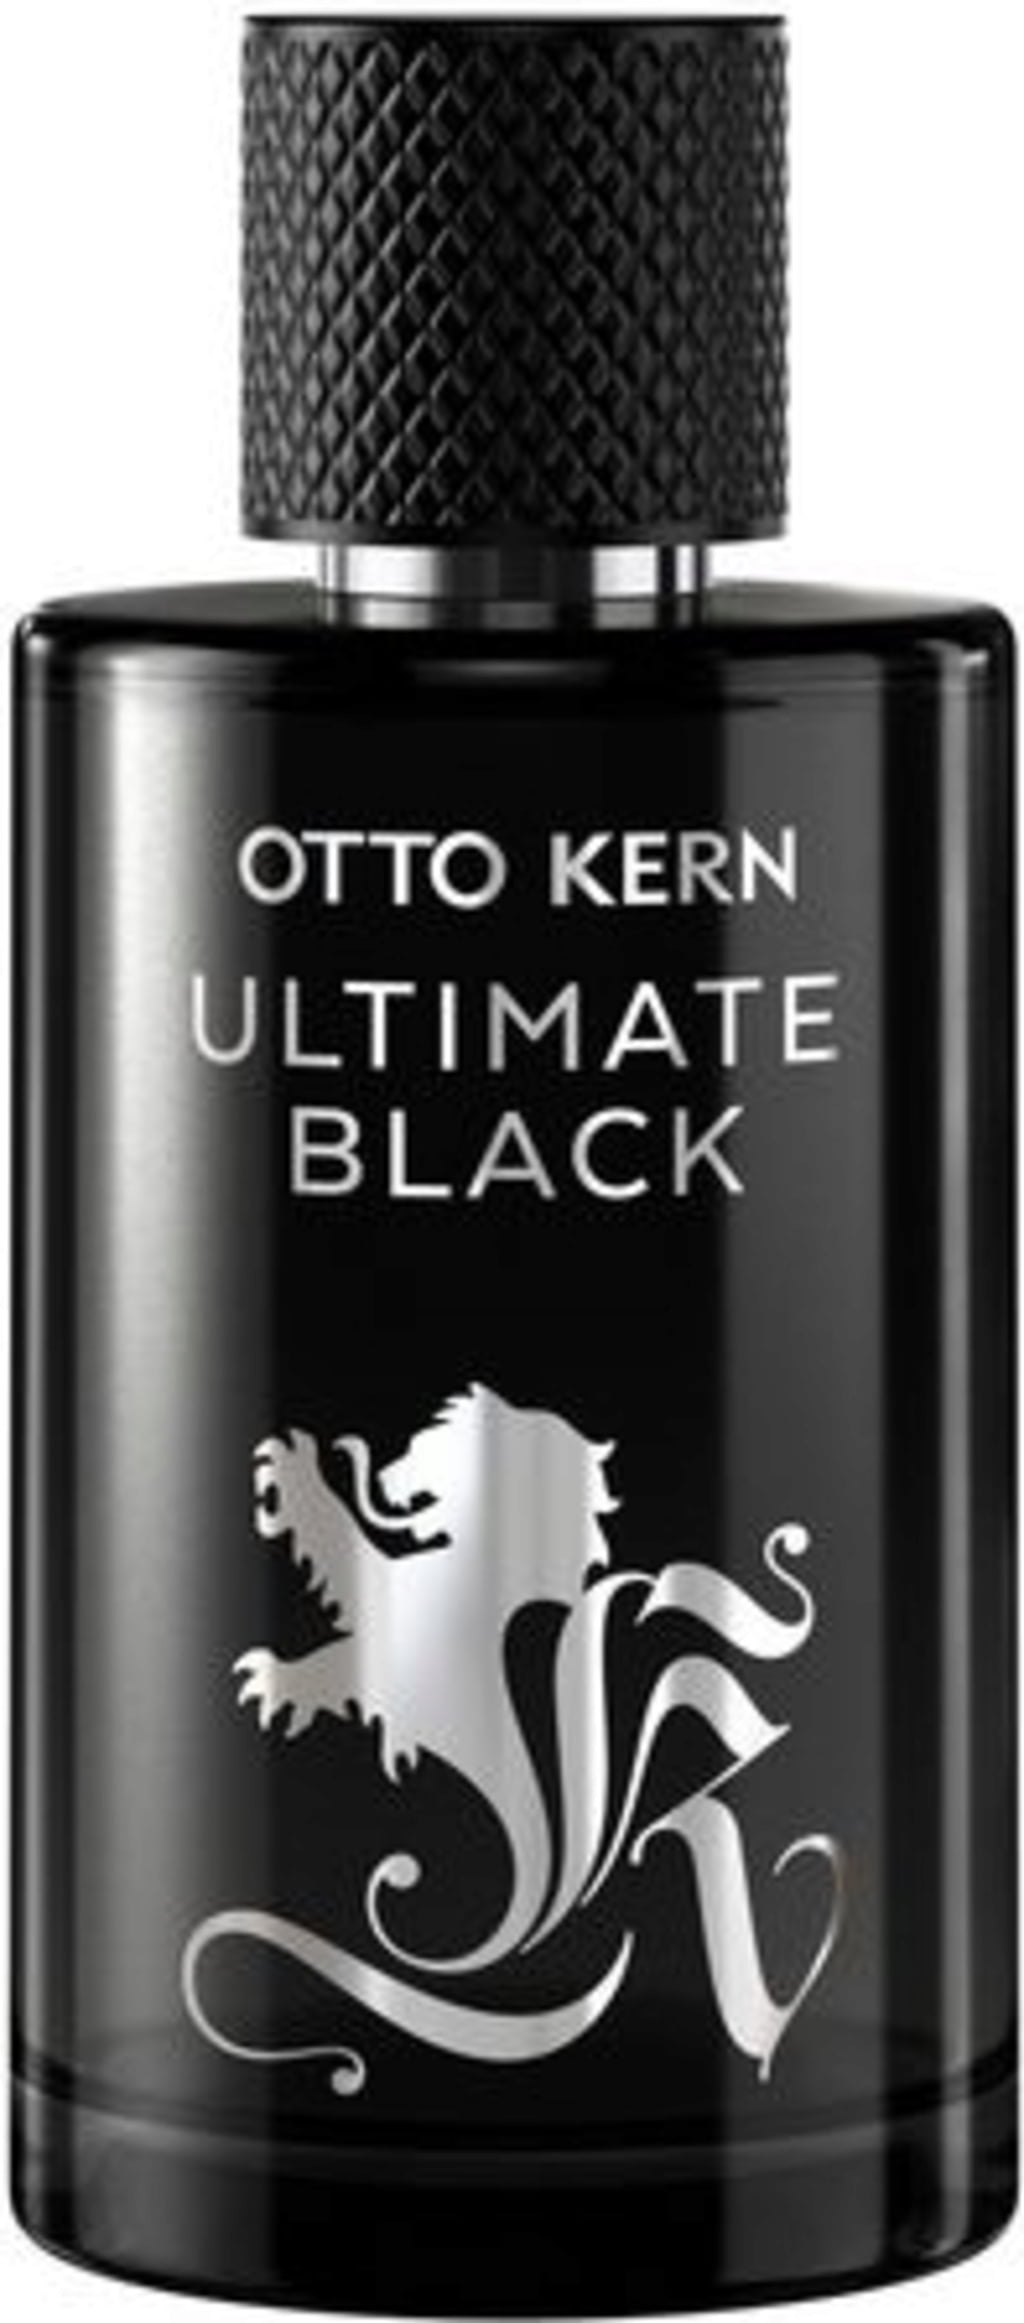 Otto Kern Ultimate Black Eau de Toilette Otto Kern cologne - a